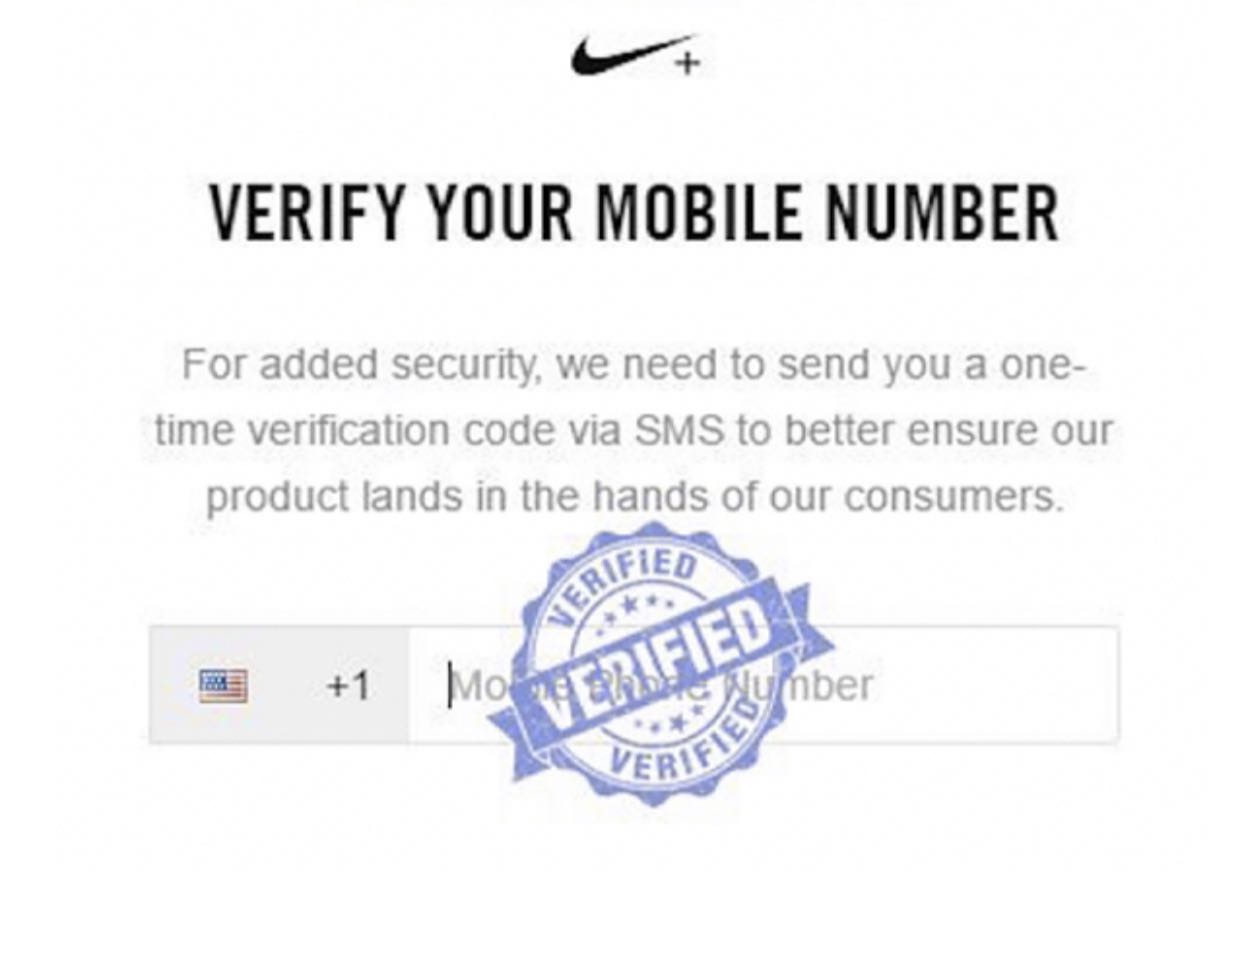 nike mobile phone verification code